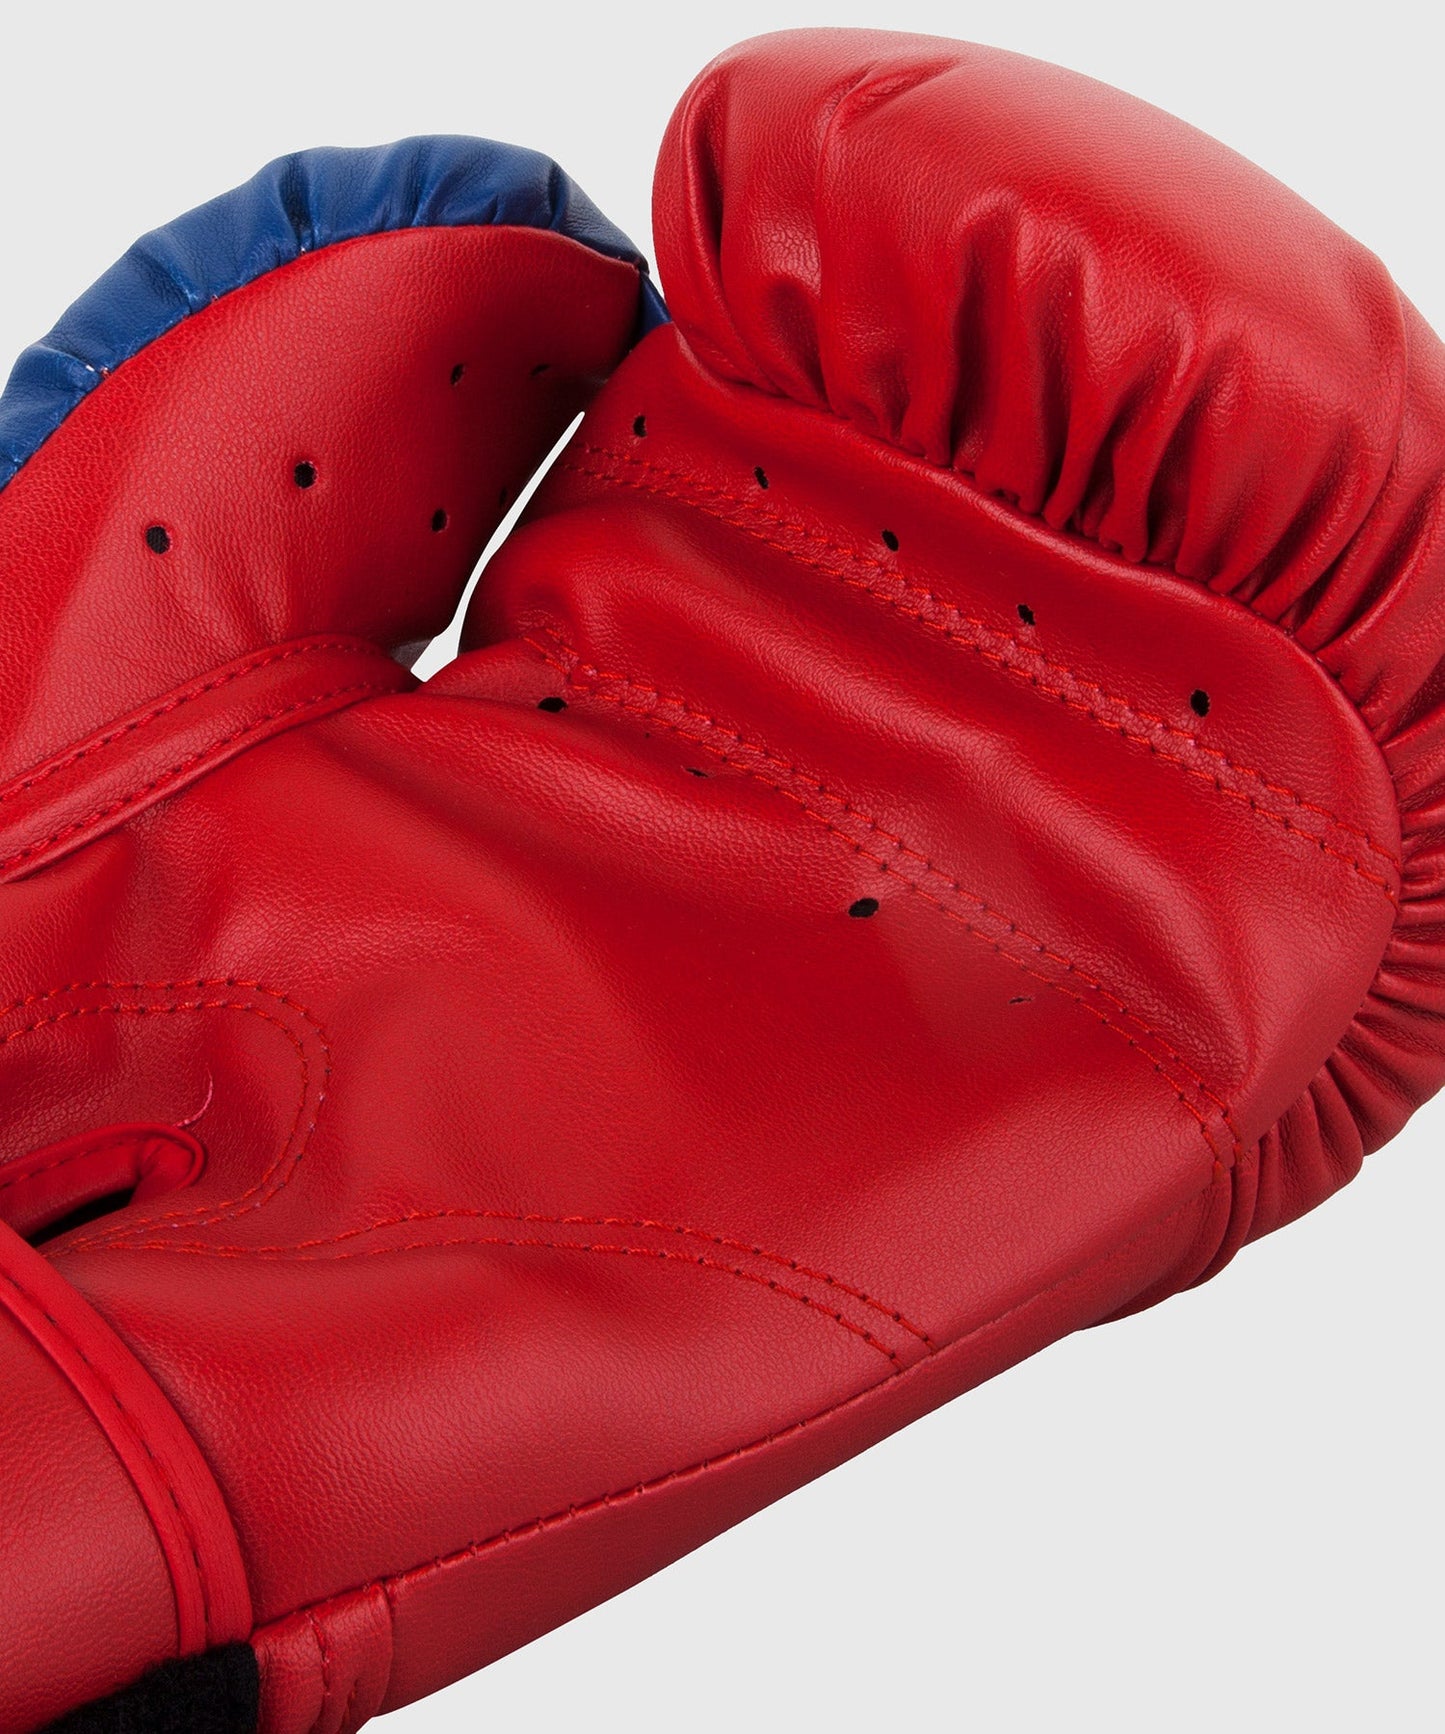 Venum Contender Boxing Gloves - Red/White-Blue